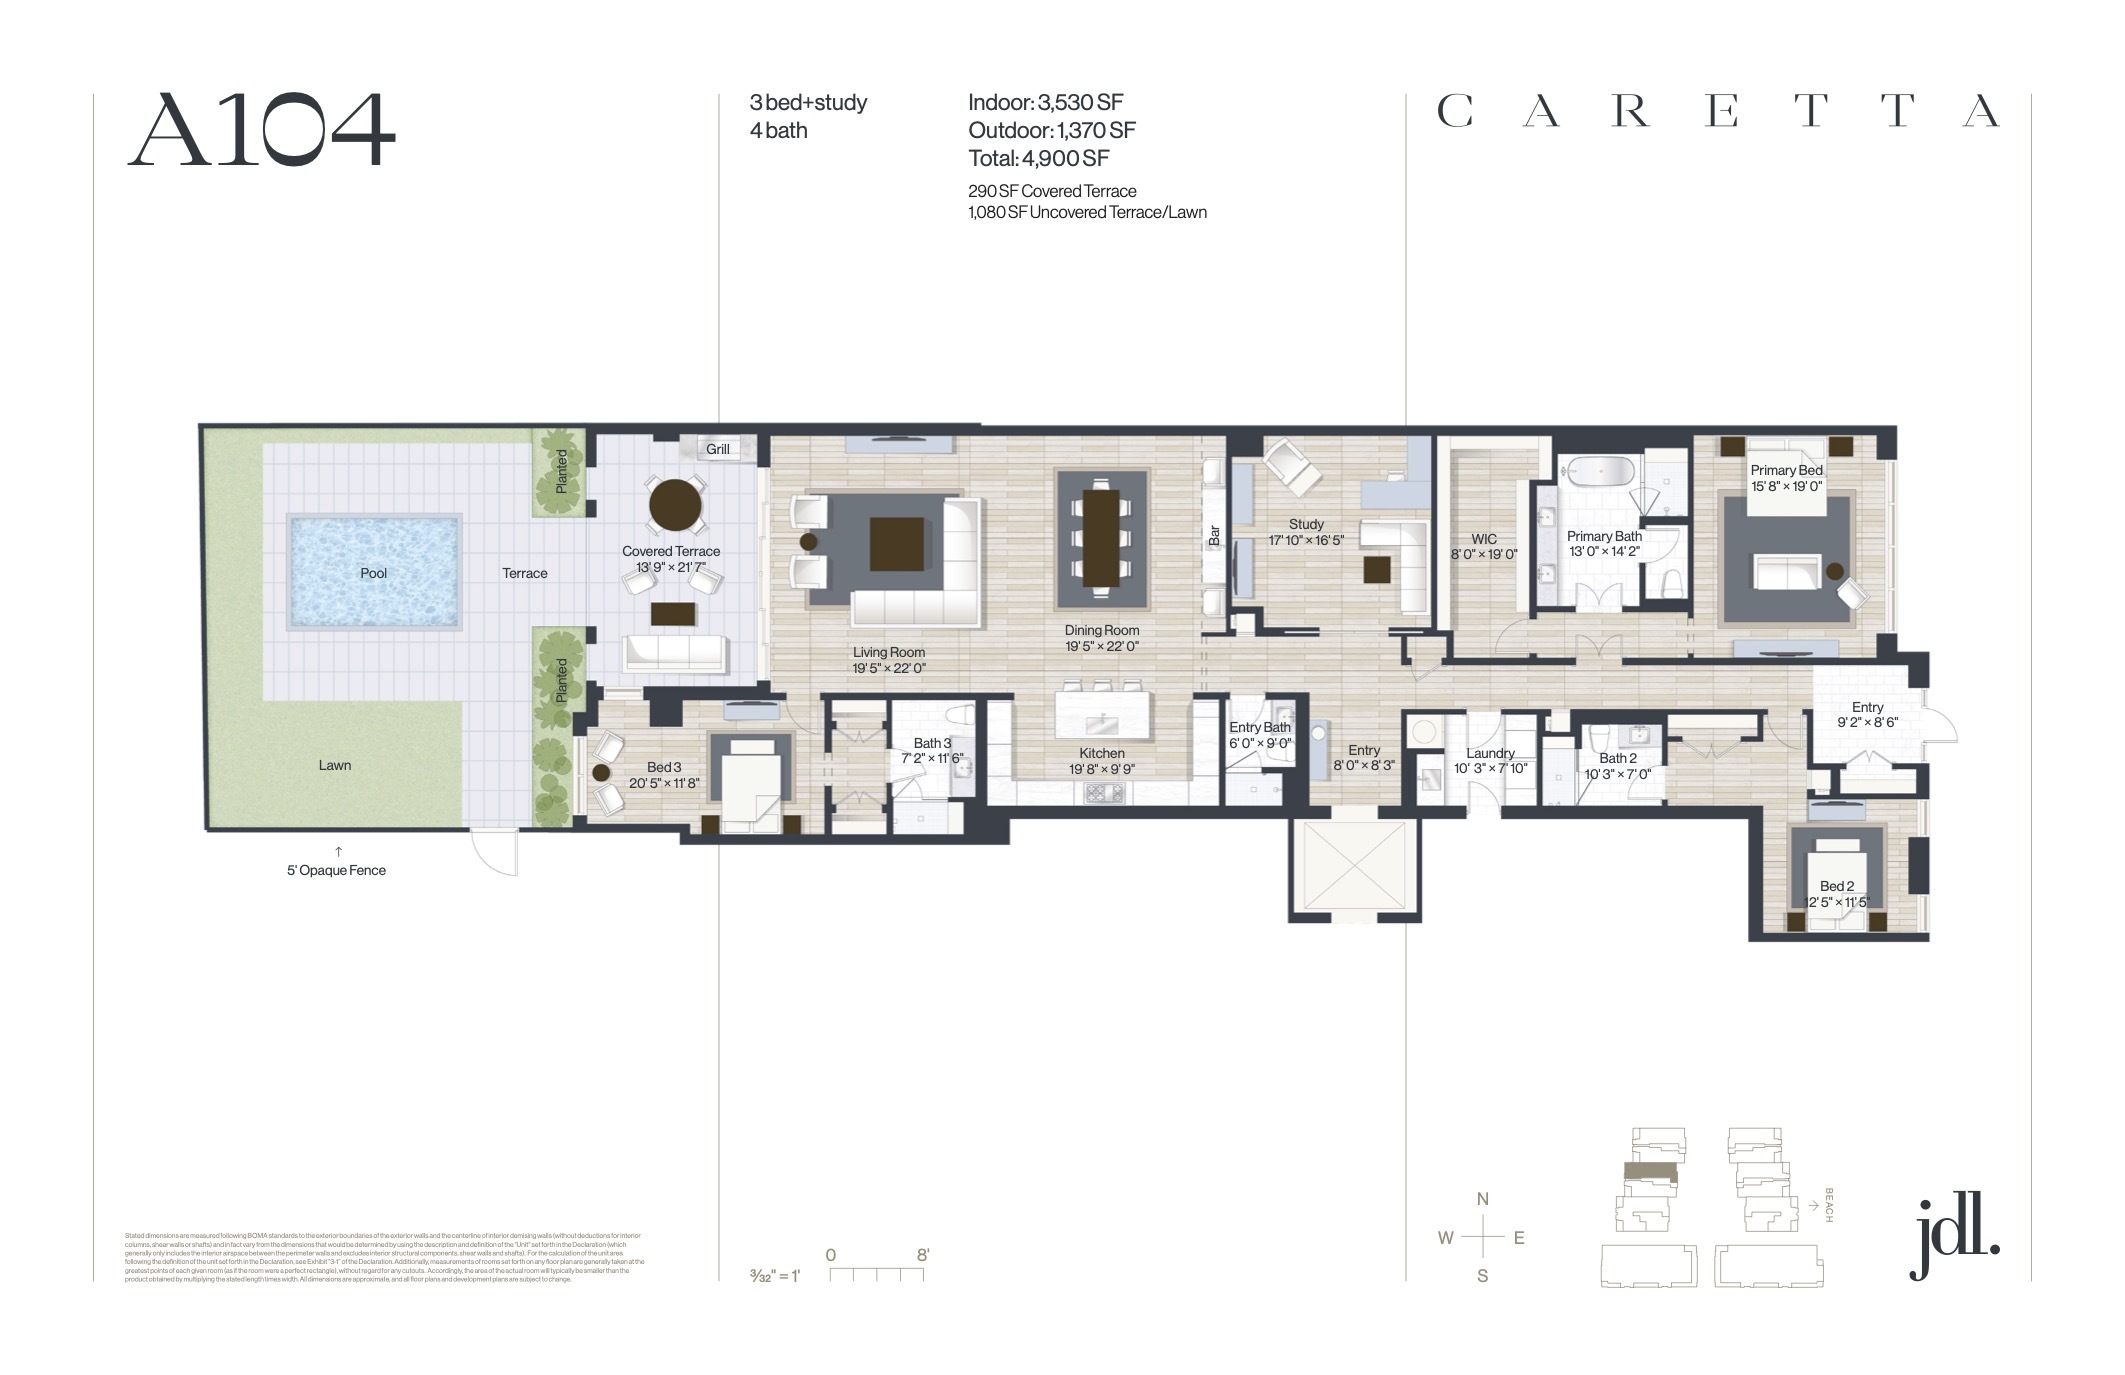 Floor Plan for Caretta Juno Beach Floorplans, A104